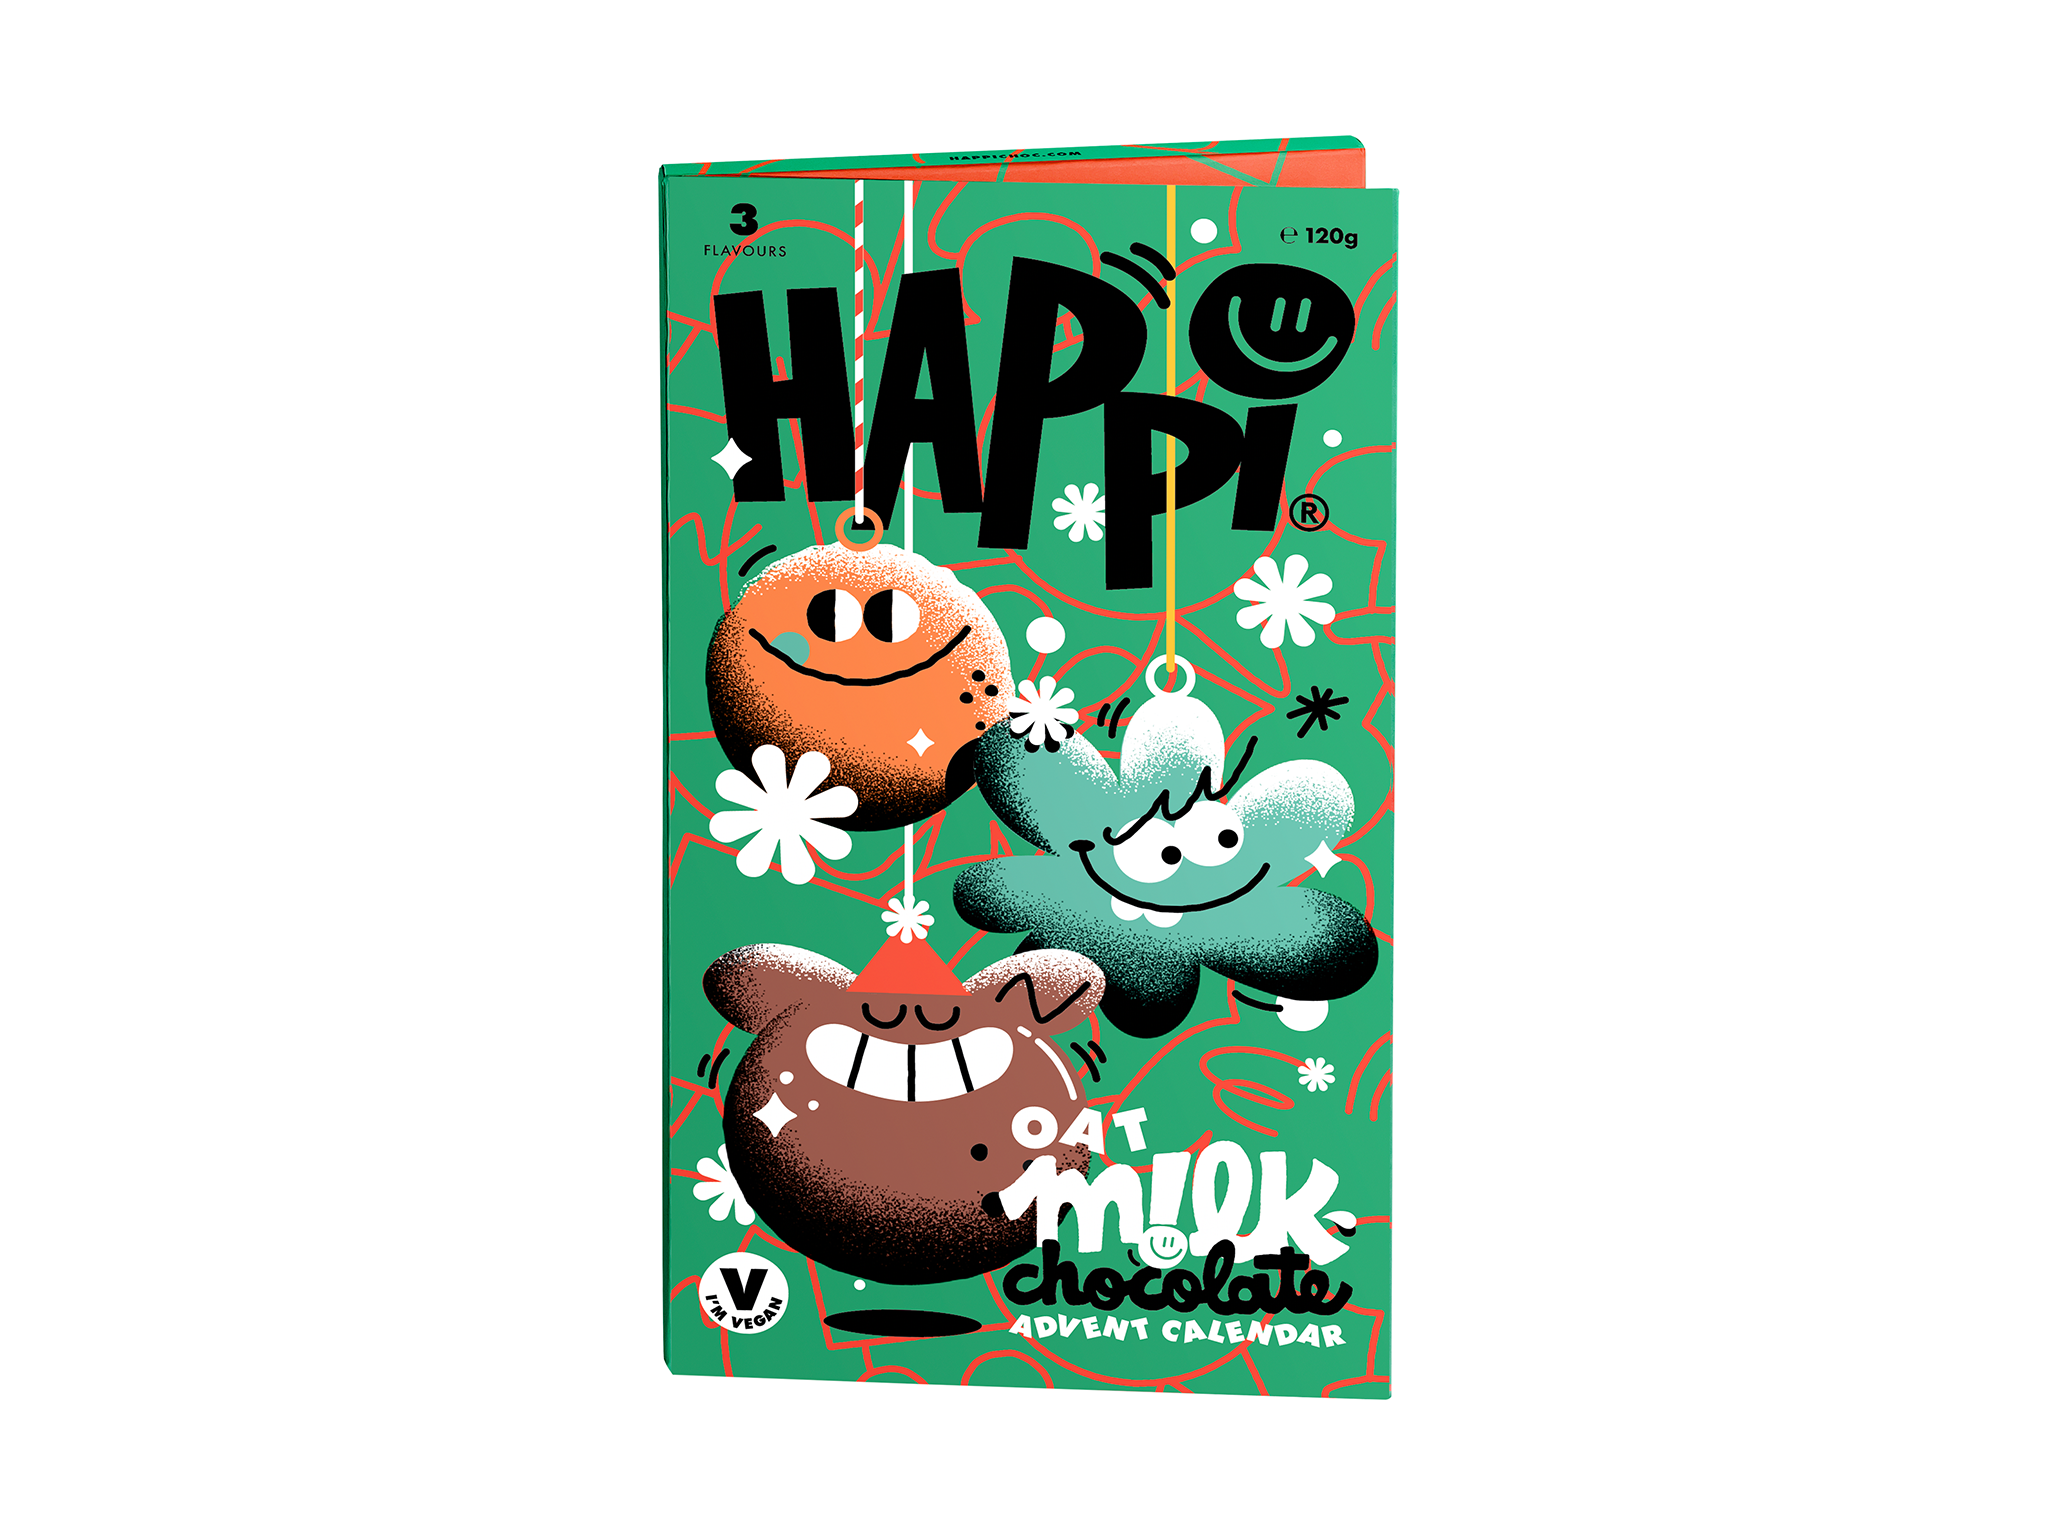 Happi chocolate advent calendar